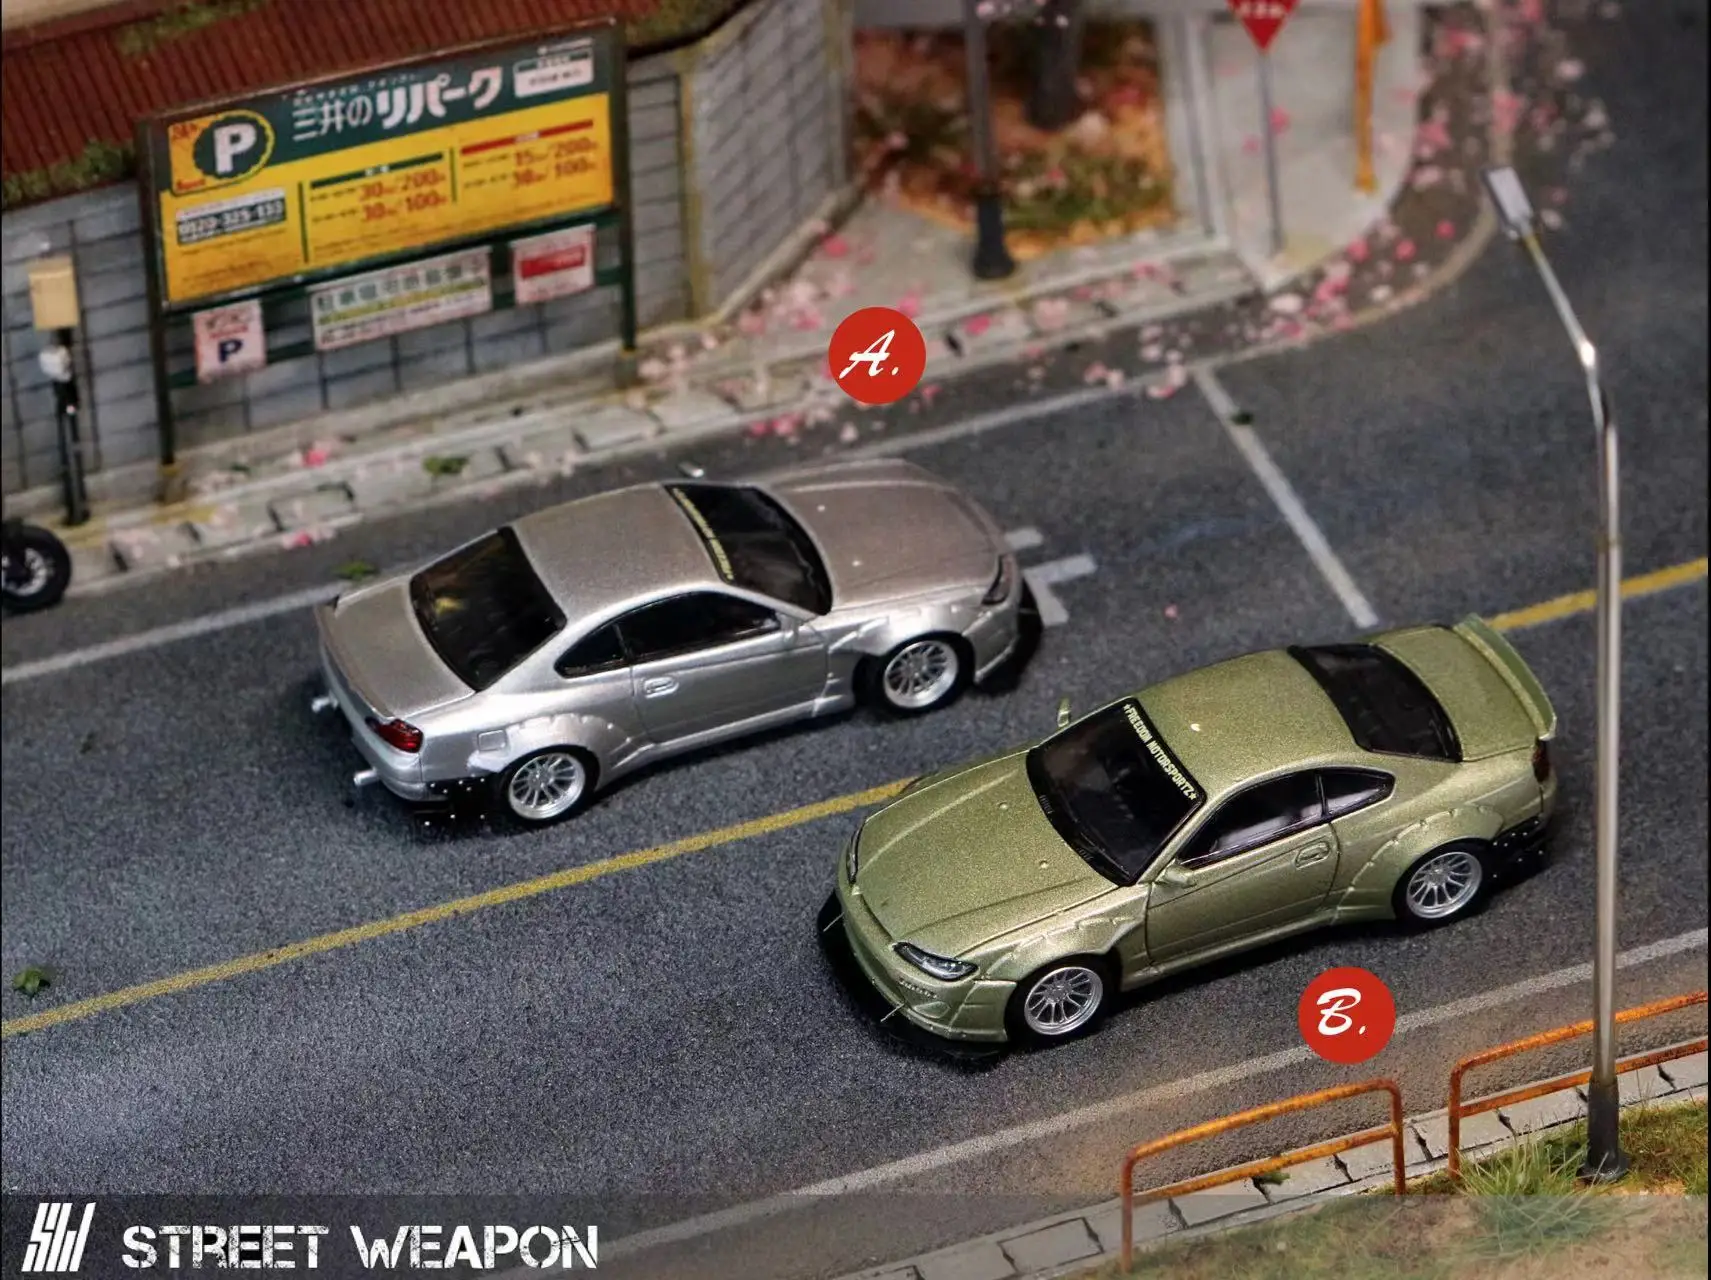 

Street Weapon SW 1:64 Nissan Slivia S15 Rocket Bunny Die-Cast Car Model Collection Miniature